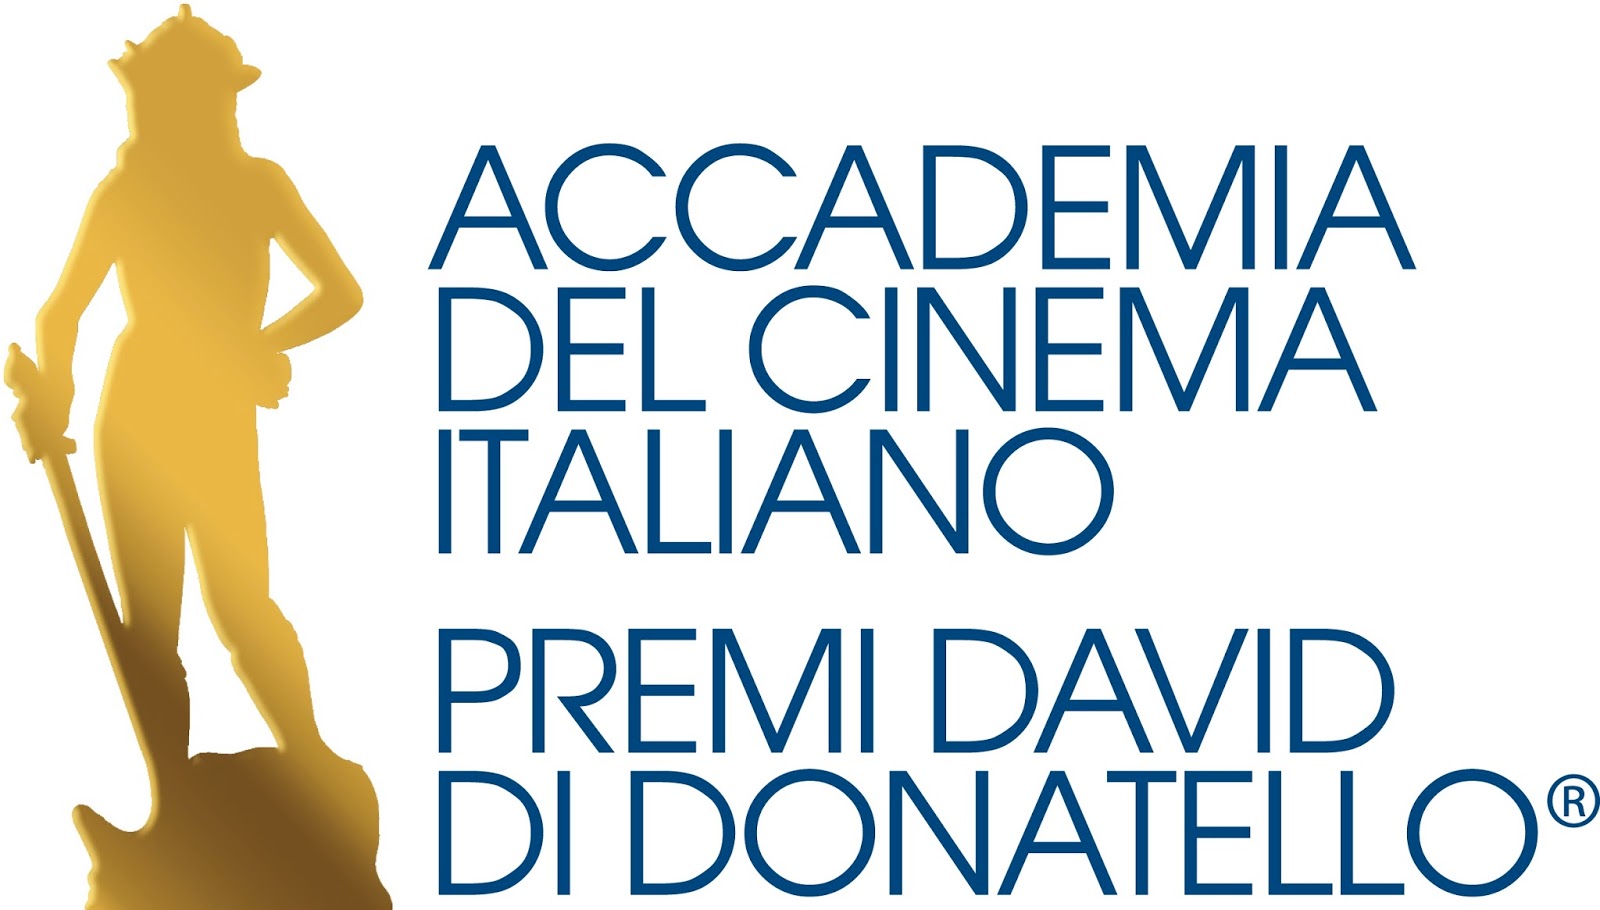 Accademia del cinema Italiano award logo